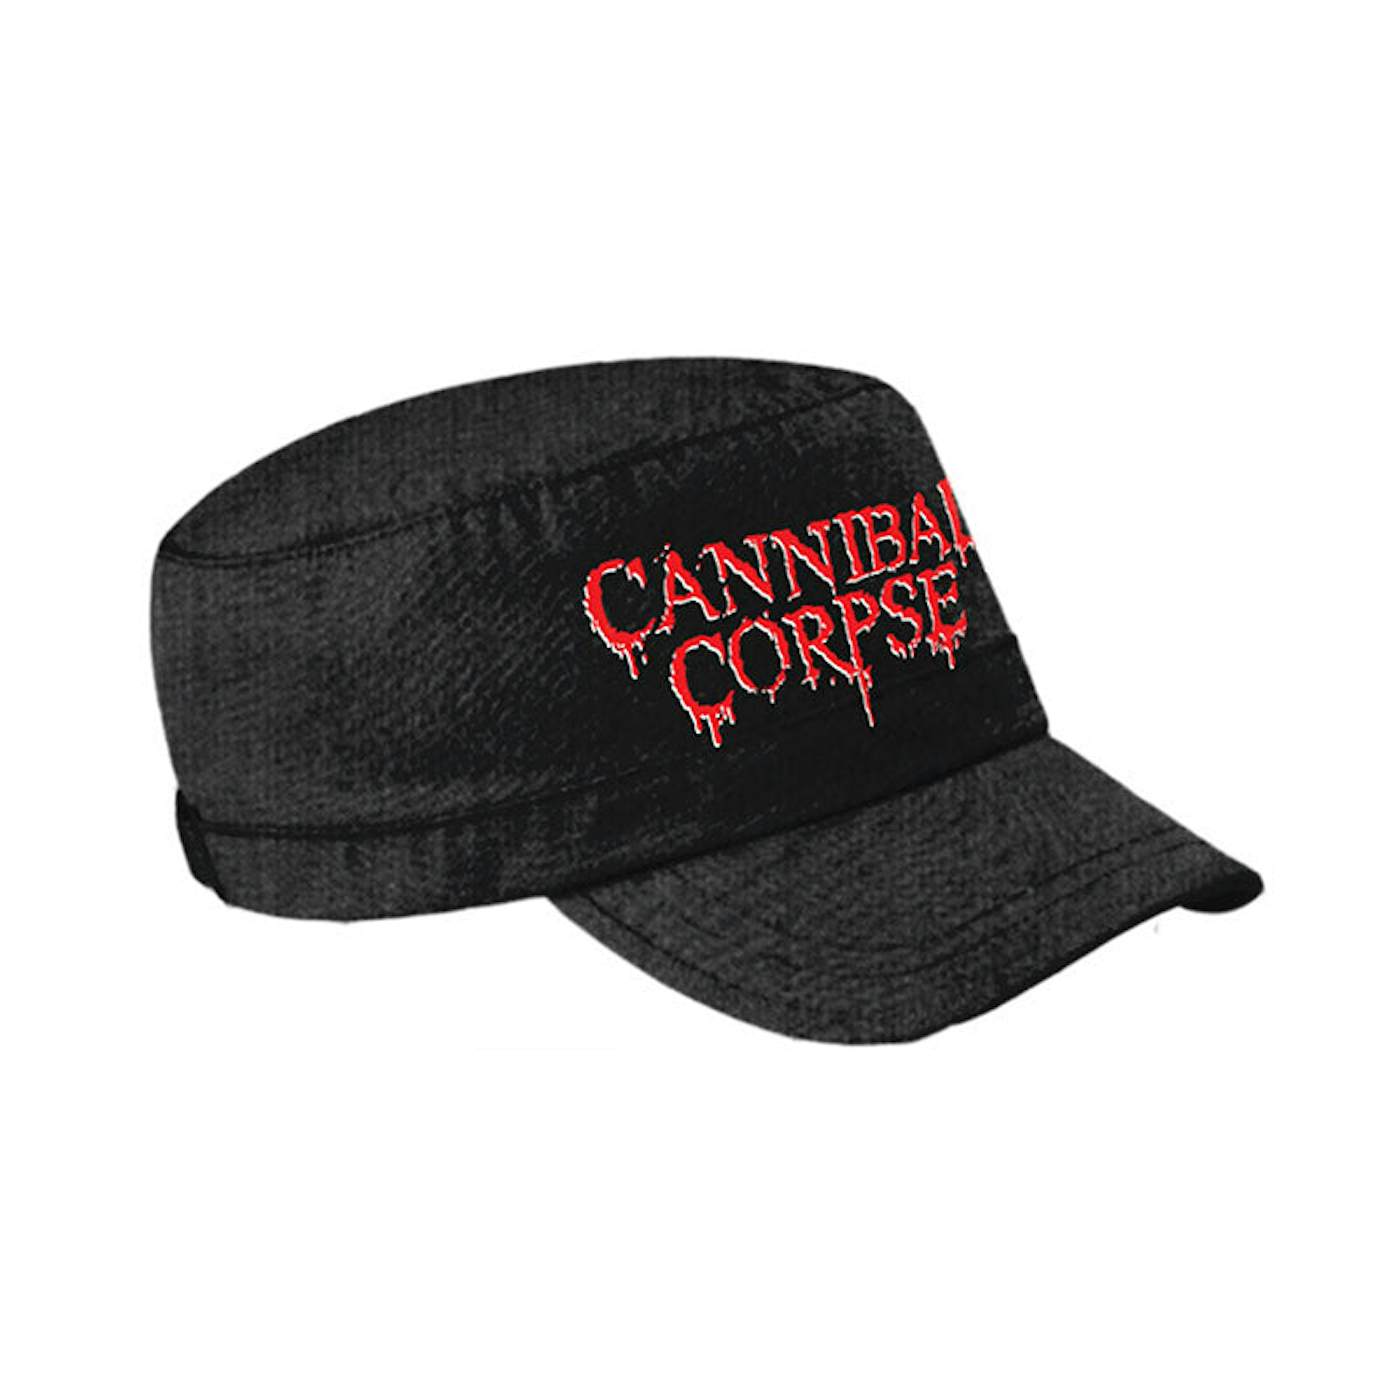 Cannibal Corpse Peaked Cap - Logo Army Cap